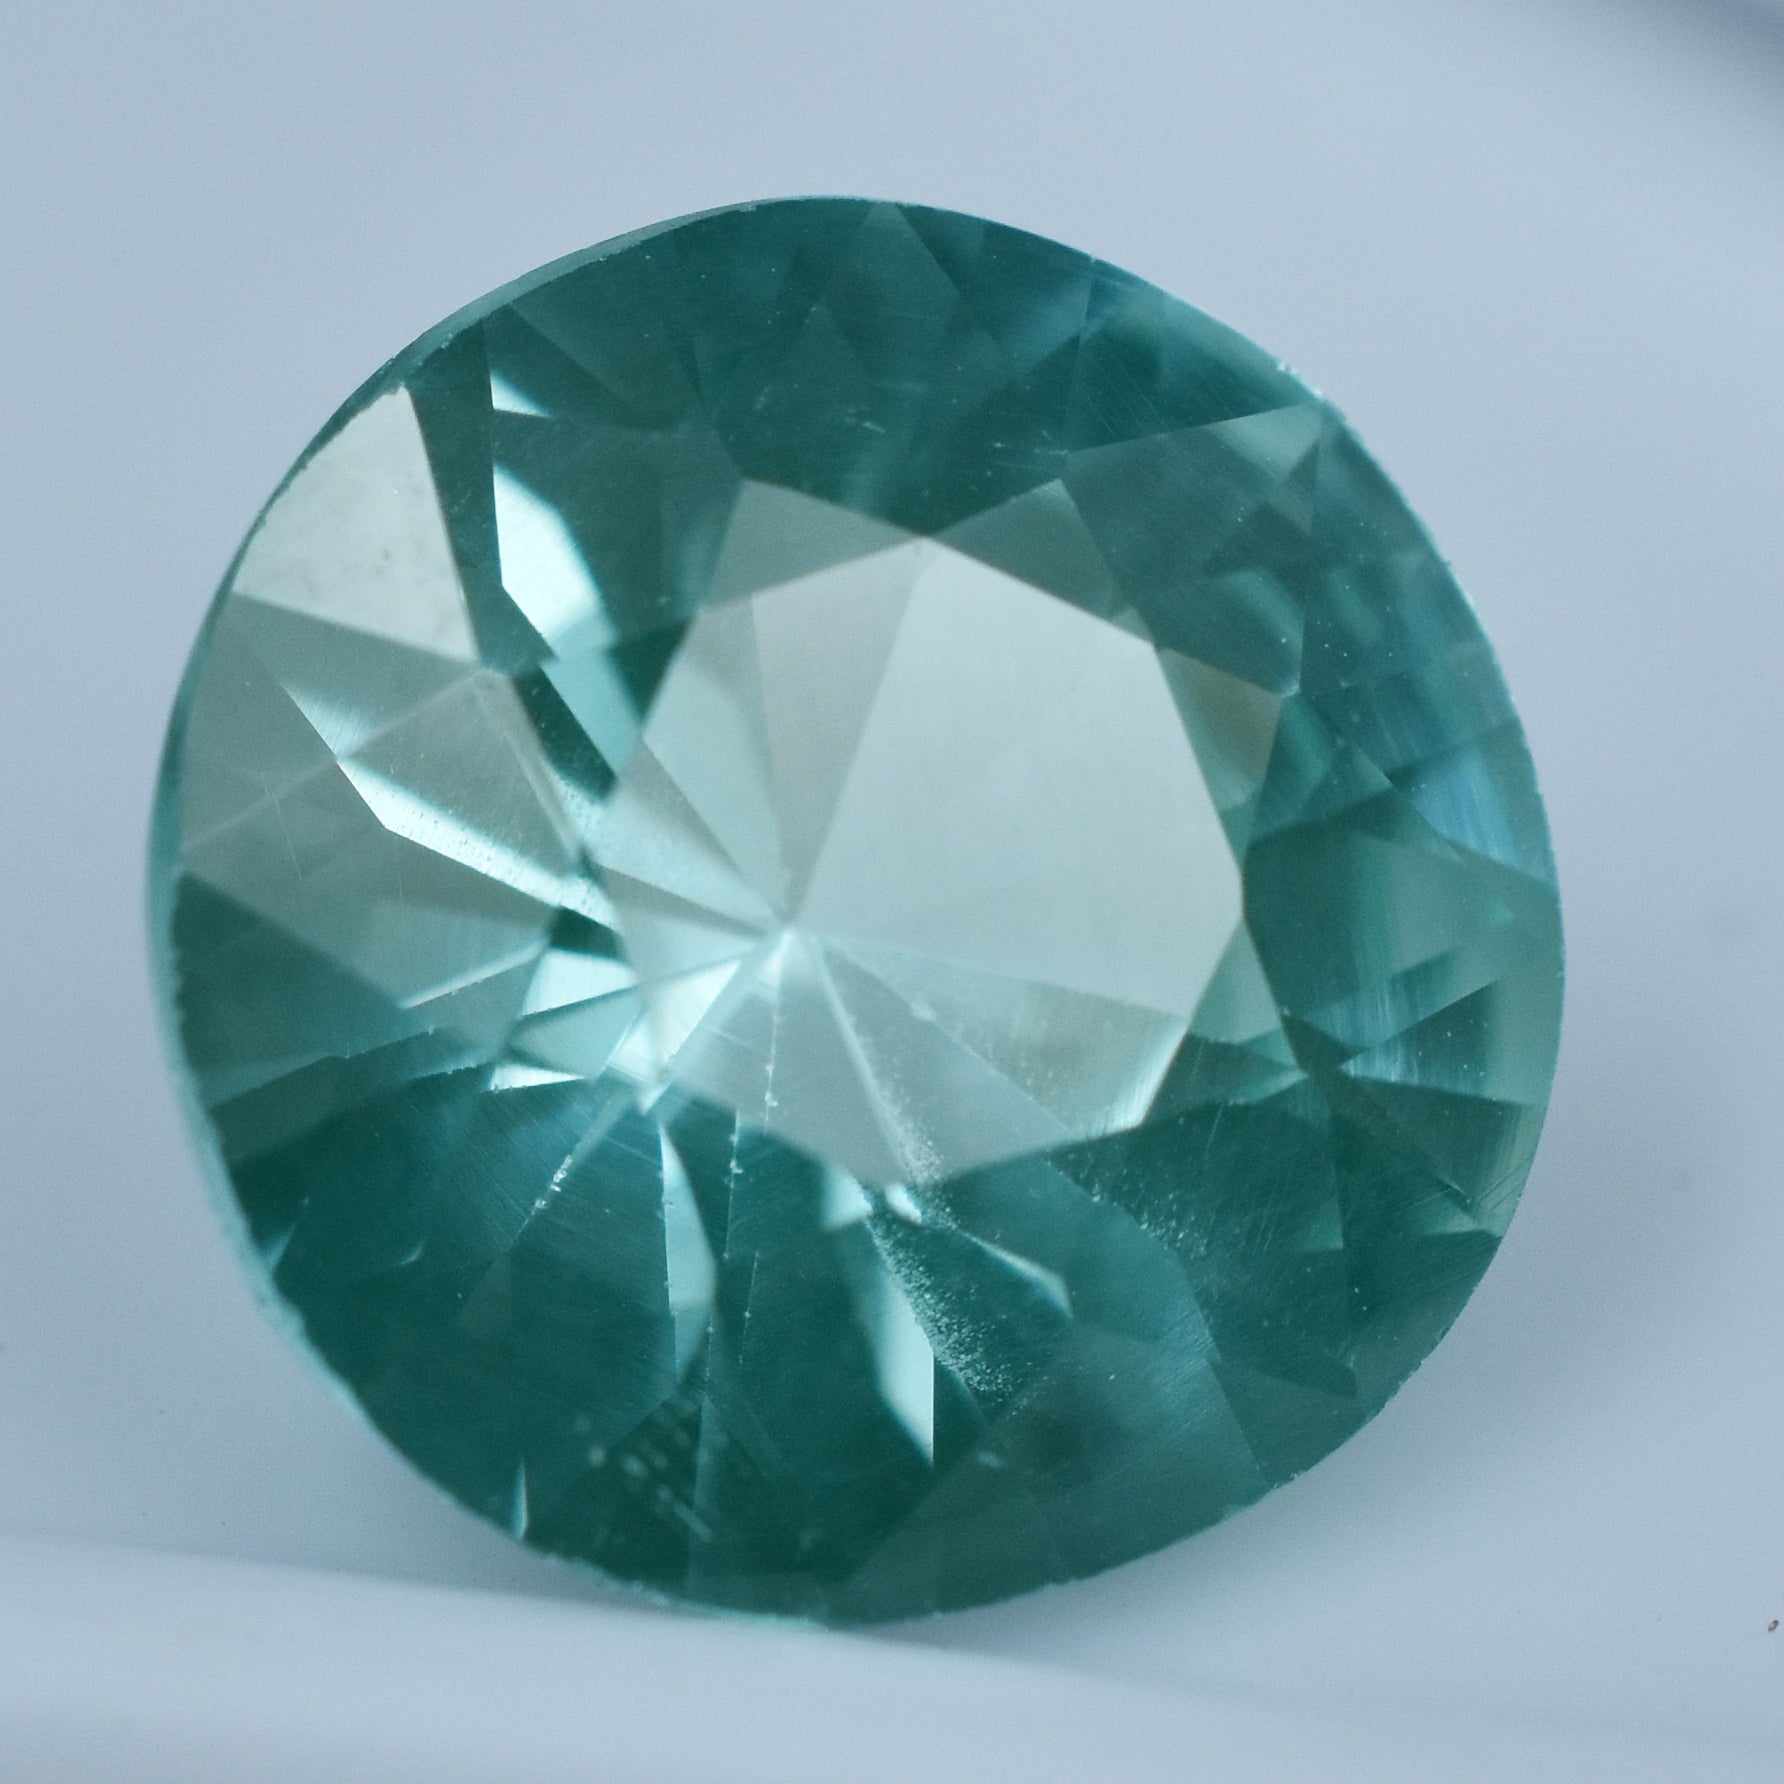 Perfect Sapphire Natural Stone 4.80 Carat Bluish Green Sapphire Round Cut Certified Loose Gemstone